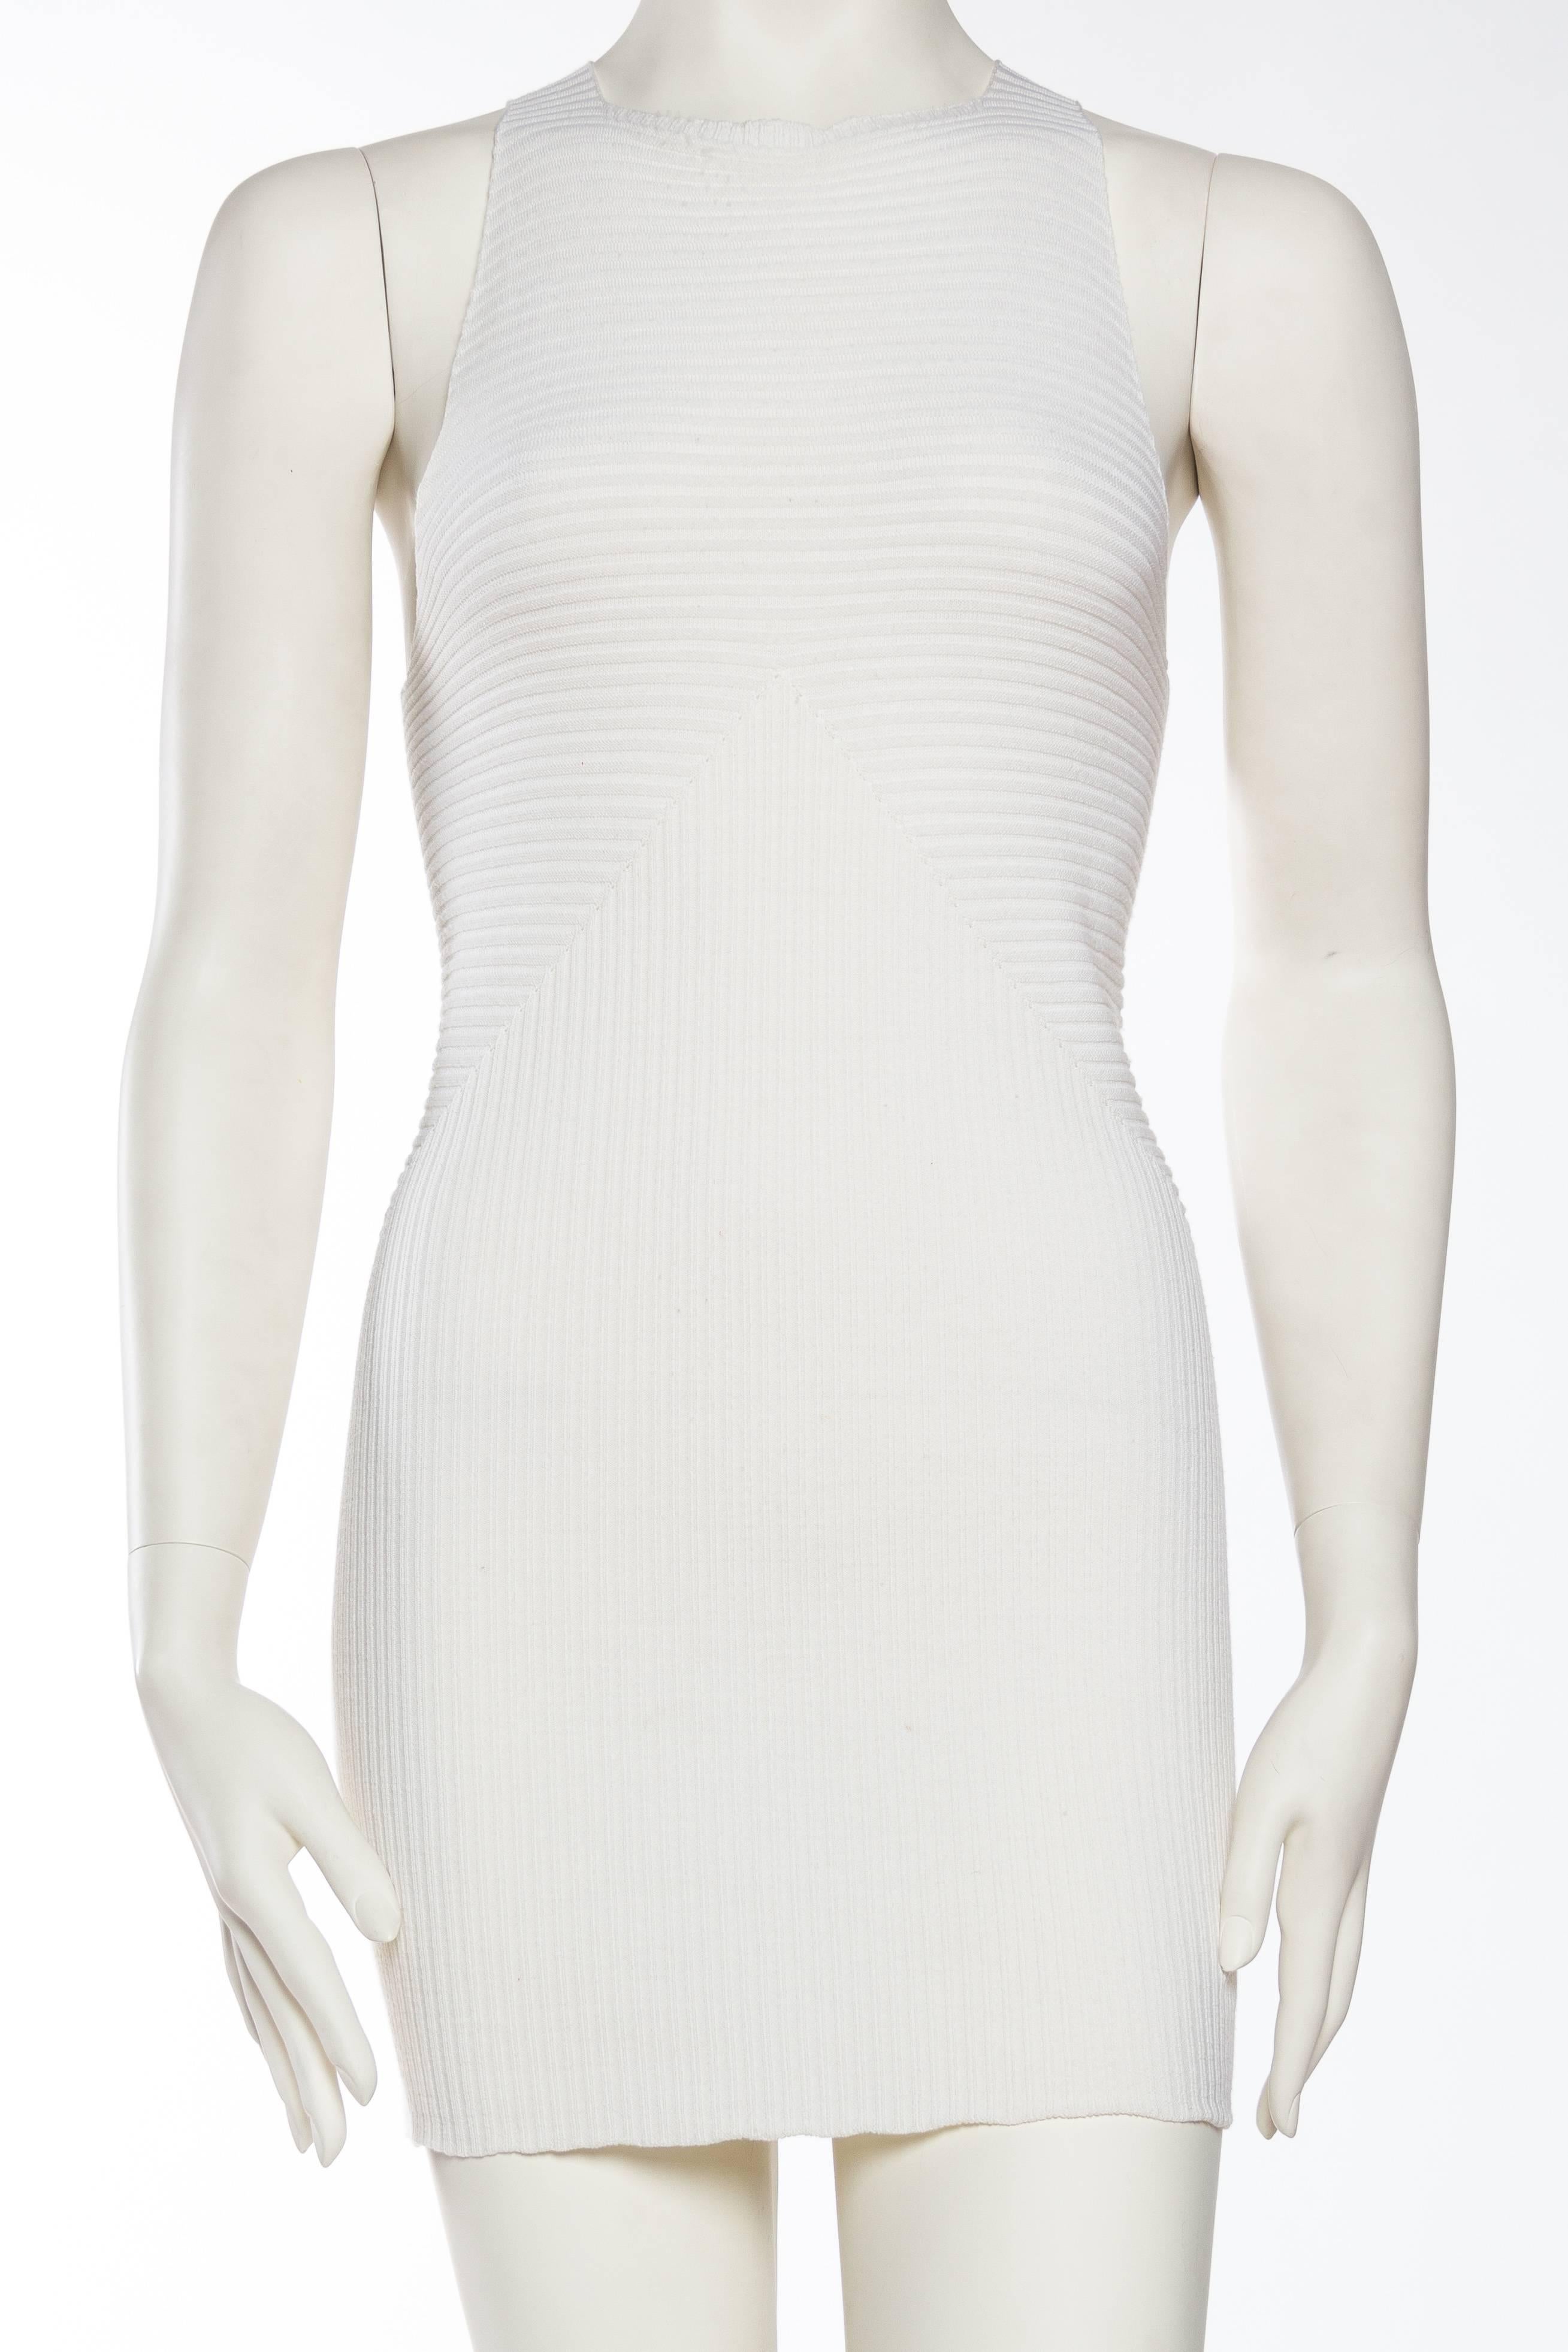 Gray Rick Owens Body-Con Minimalist Little White Dress